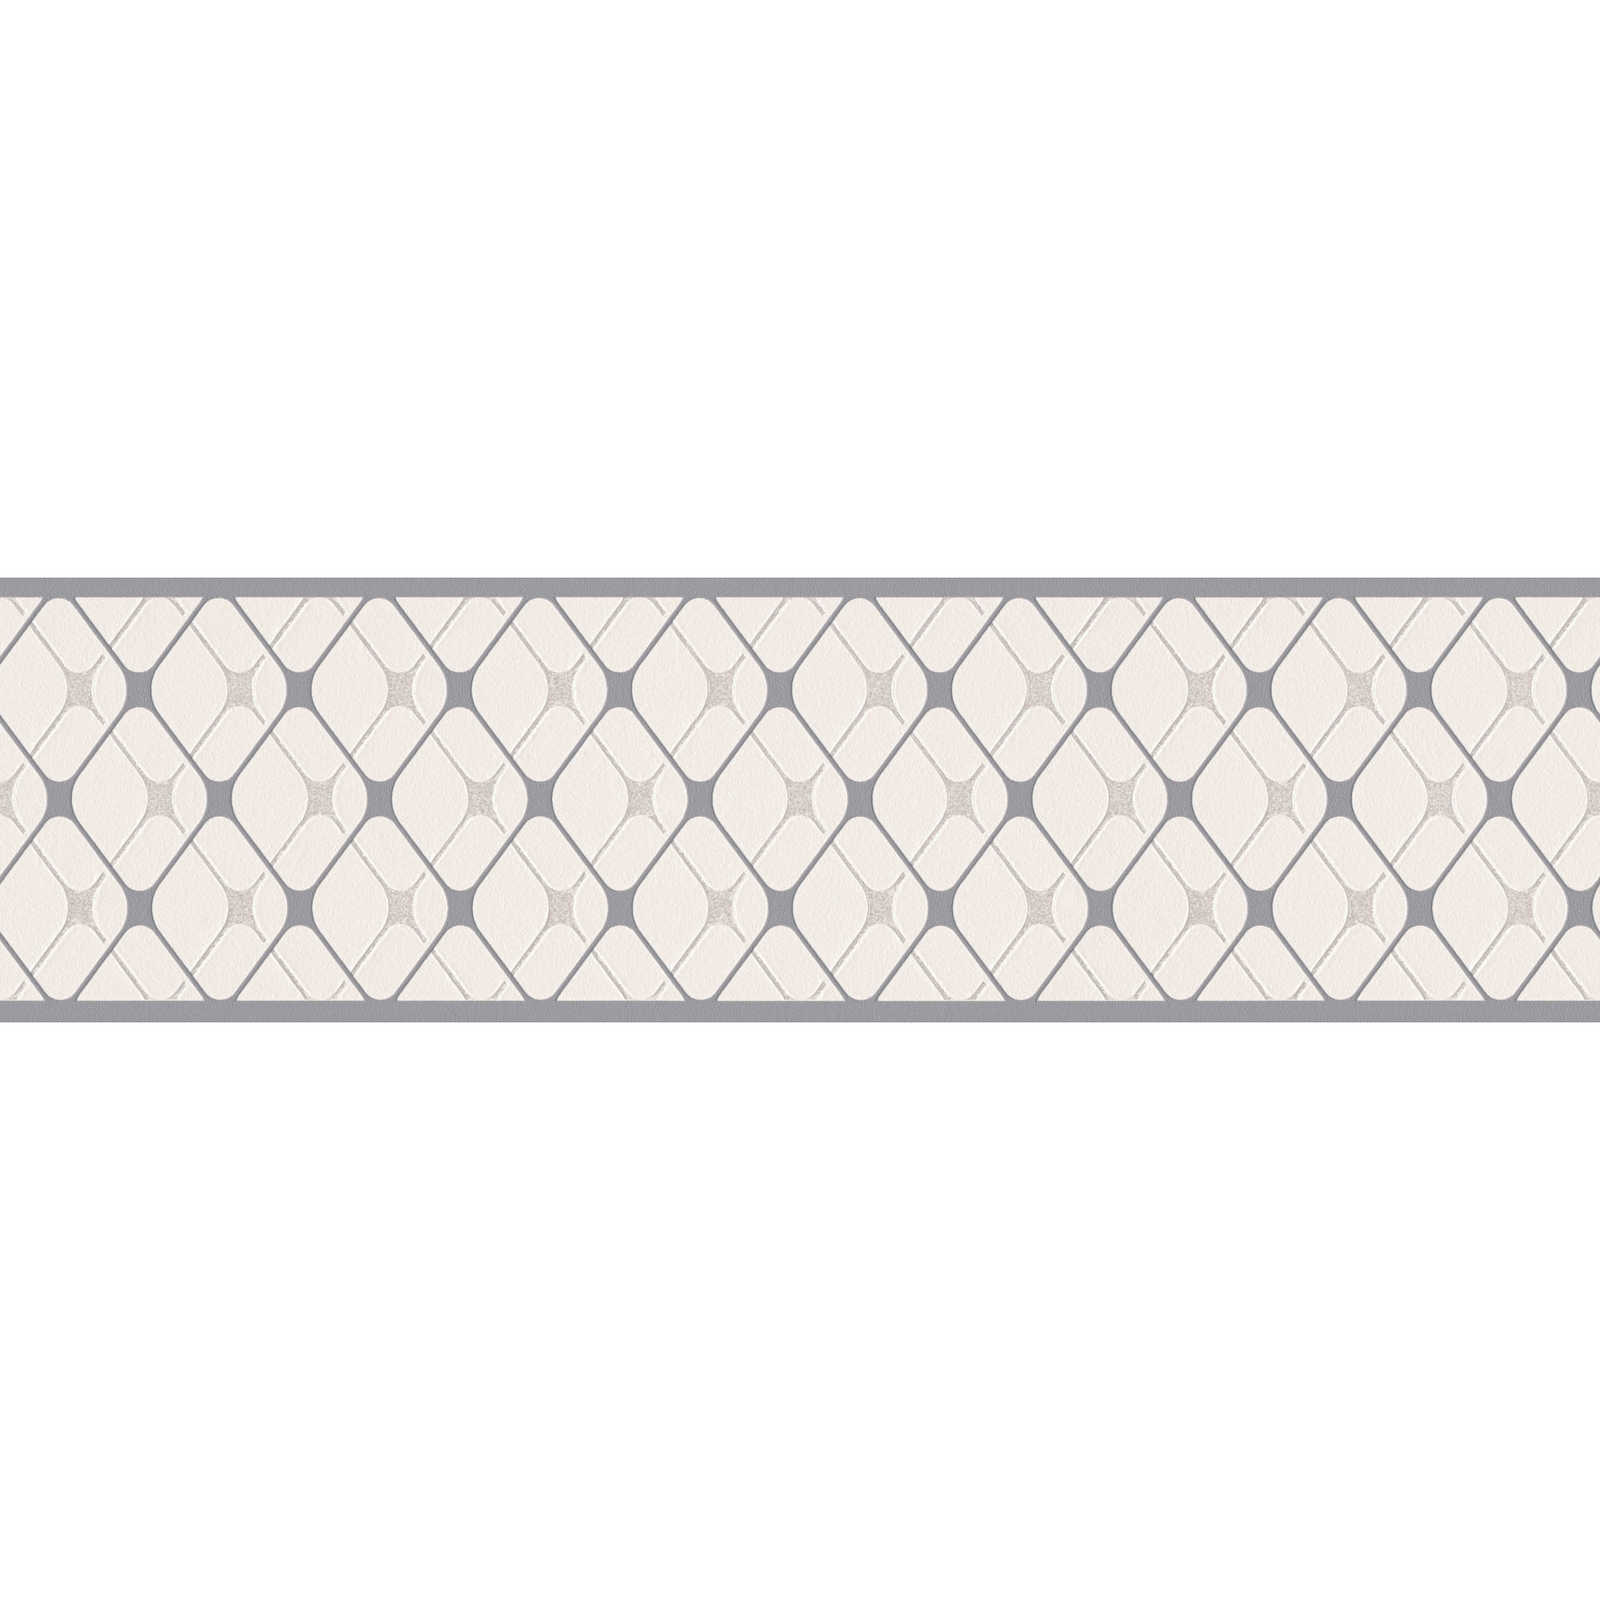         Self-adhesive wallpaper border with diamond pattern - grey, white
    